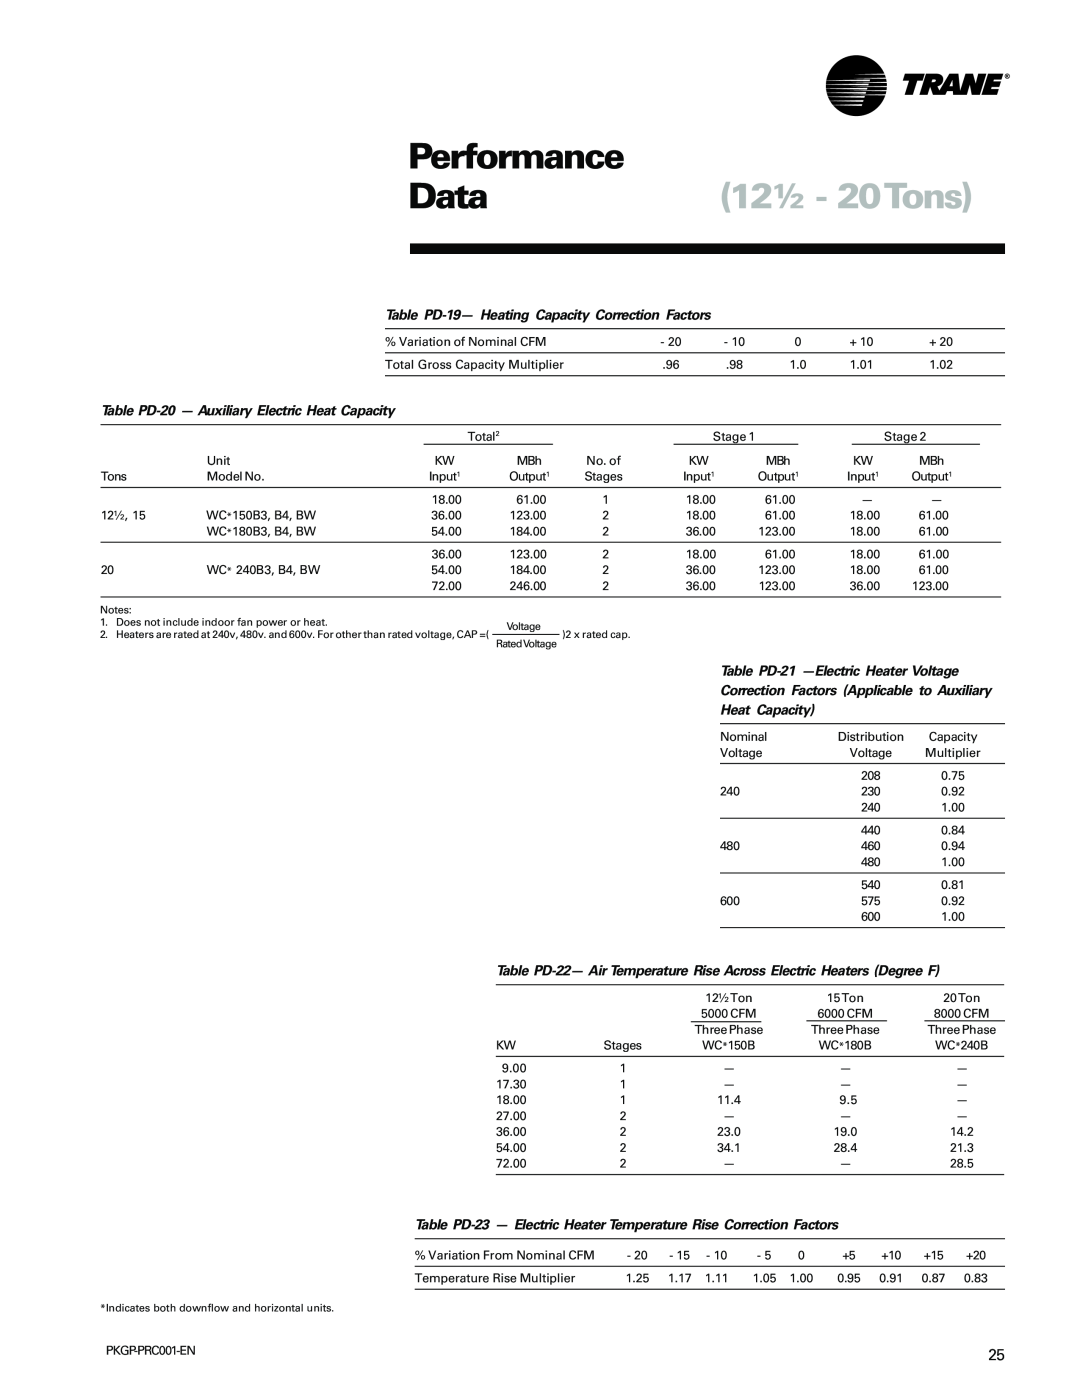 Trane PKGP-PRC001-EN manual Performance, Data12½ - 20Tons, Table PD-19-Heating Capacity Correction Factors, Heat Capacity 